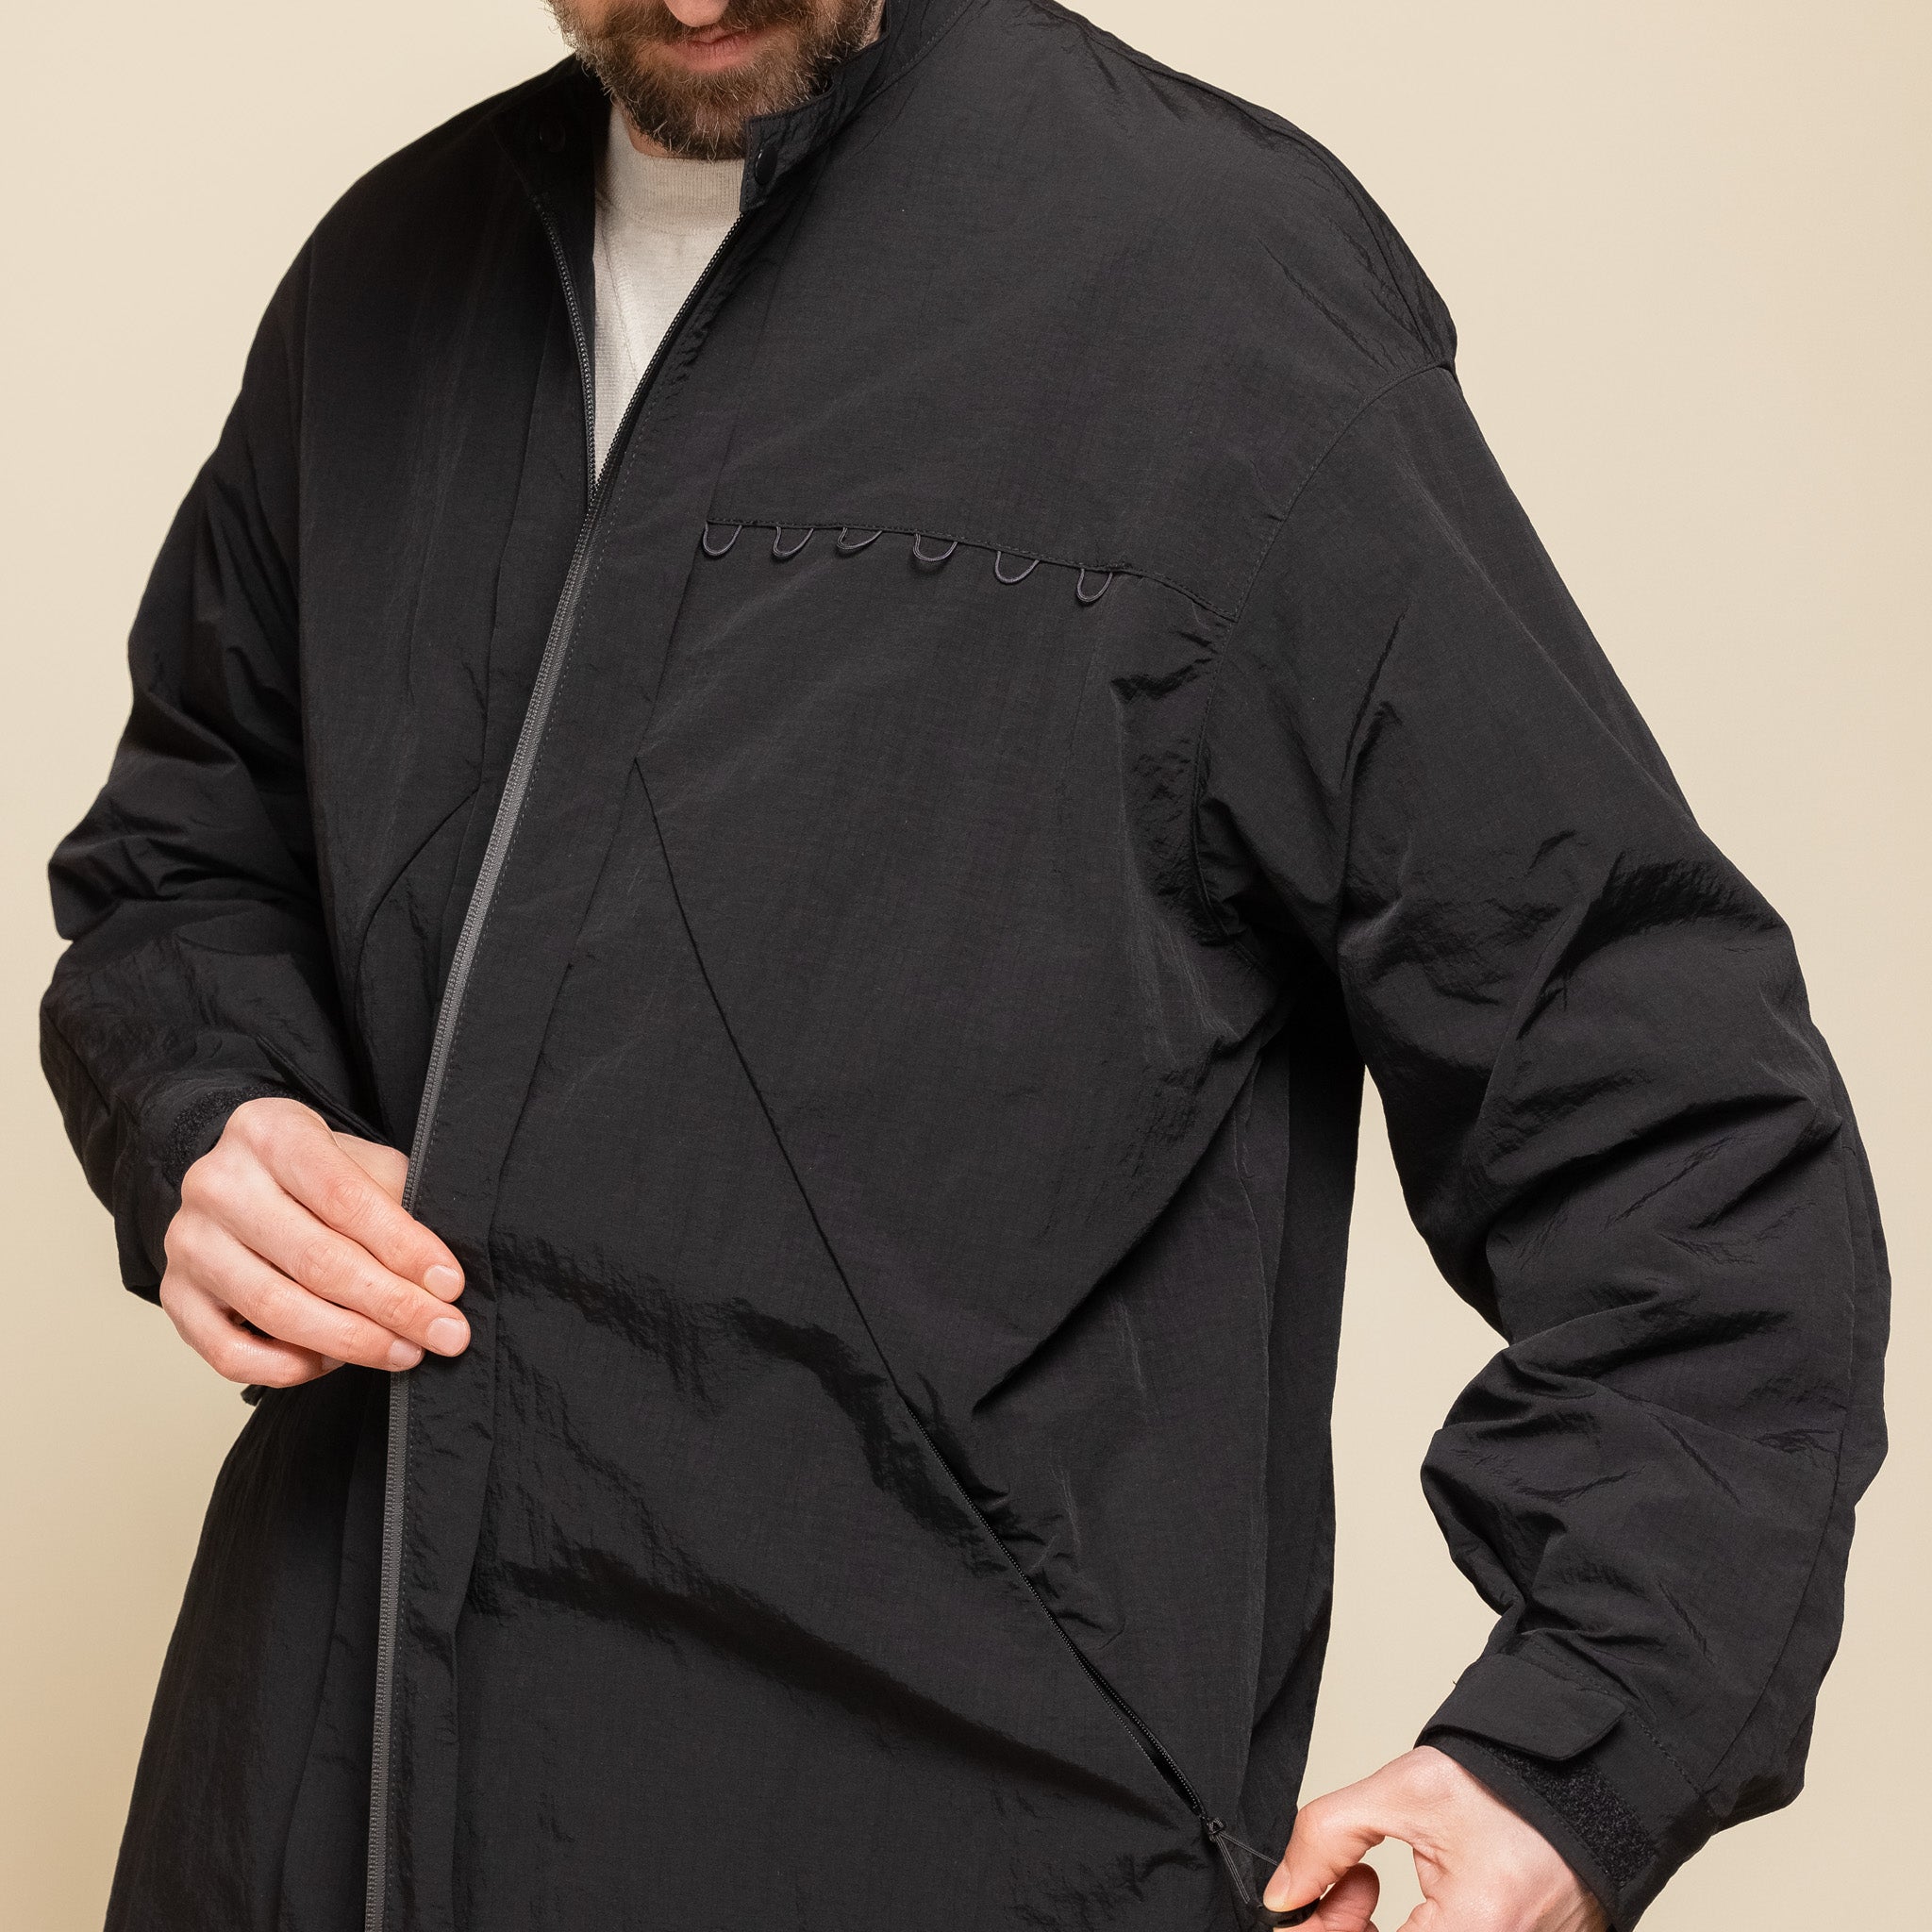 CMF Comfy Outdoor Garment - Untitled Coat - Black